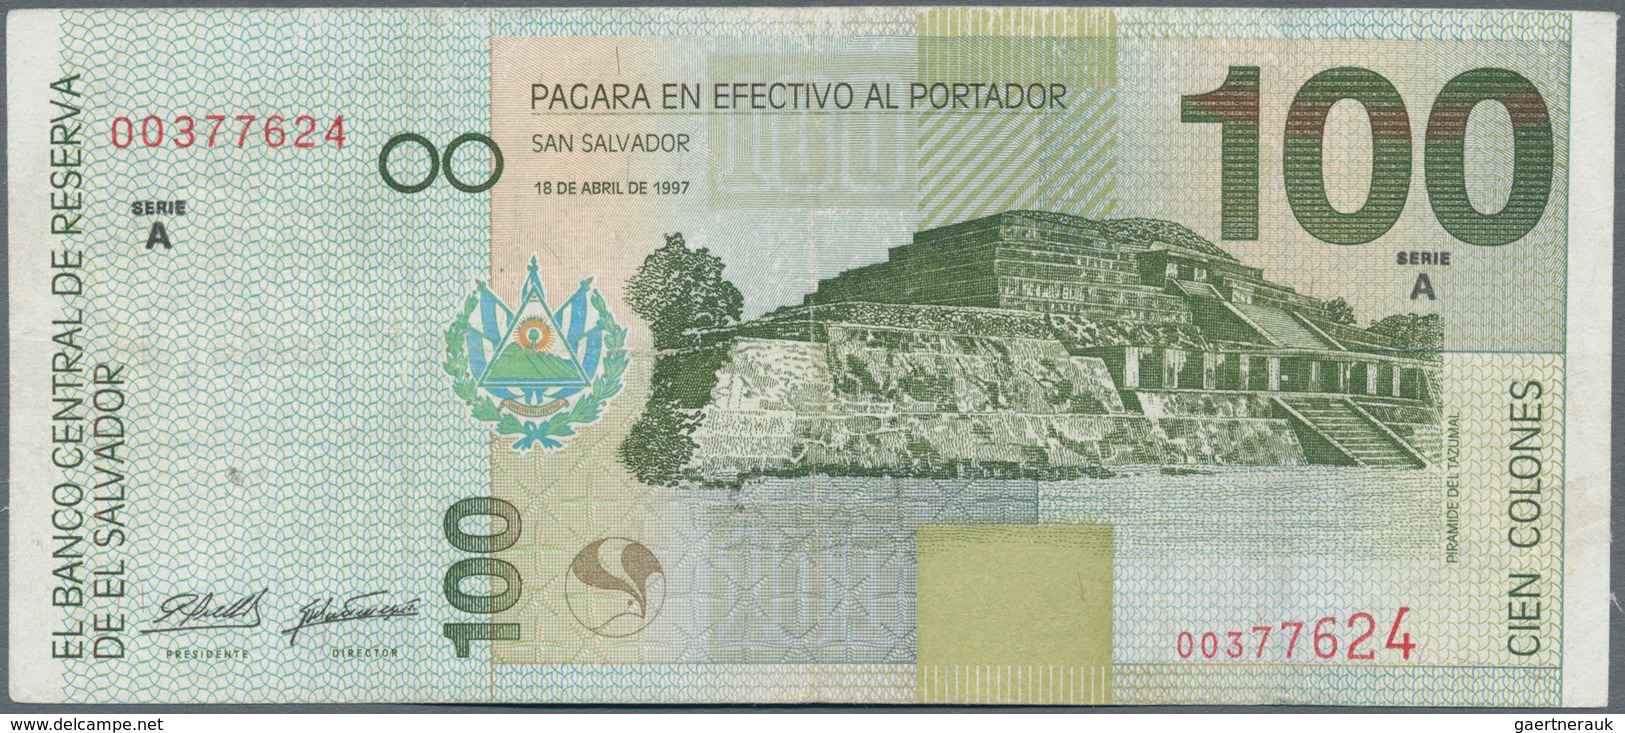 El Salvador: Pair With 100 Colones 1997 P.151a (F+) And 200 Colones 1998 P.152a (F With Small Tear). - El Salvador